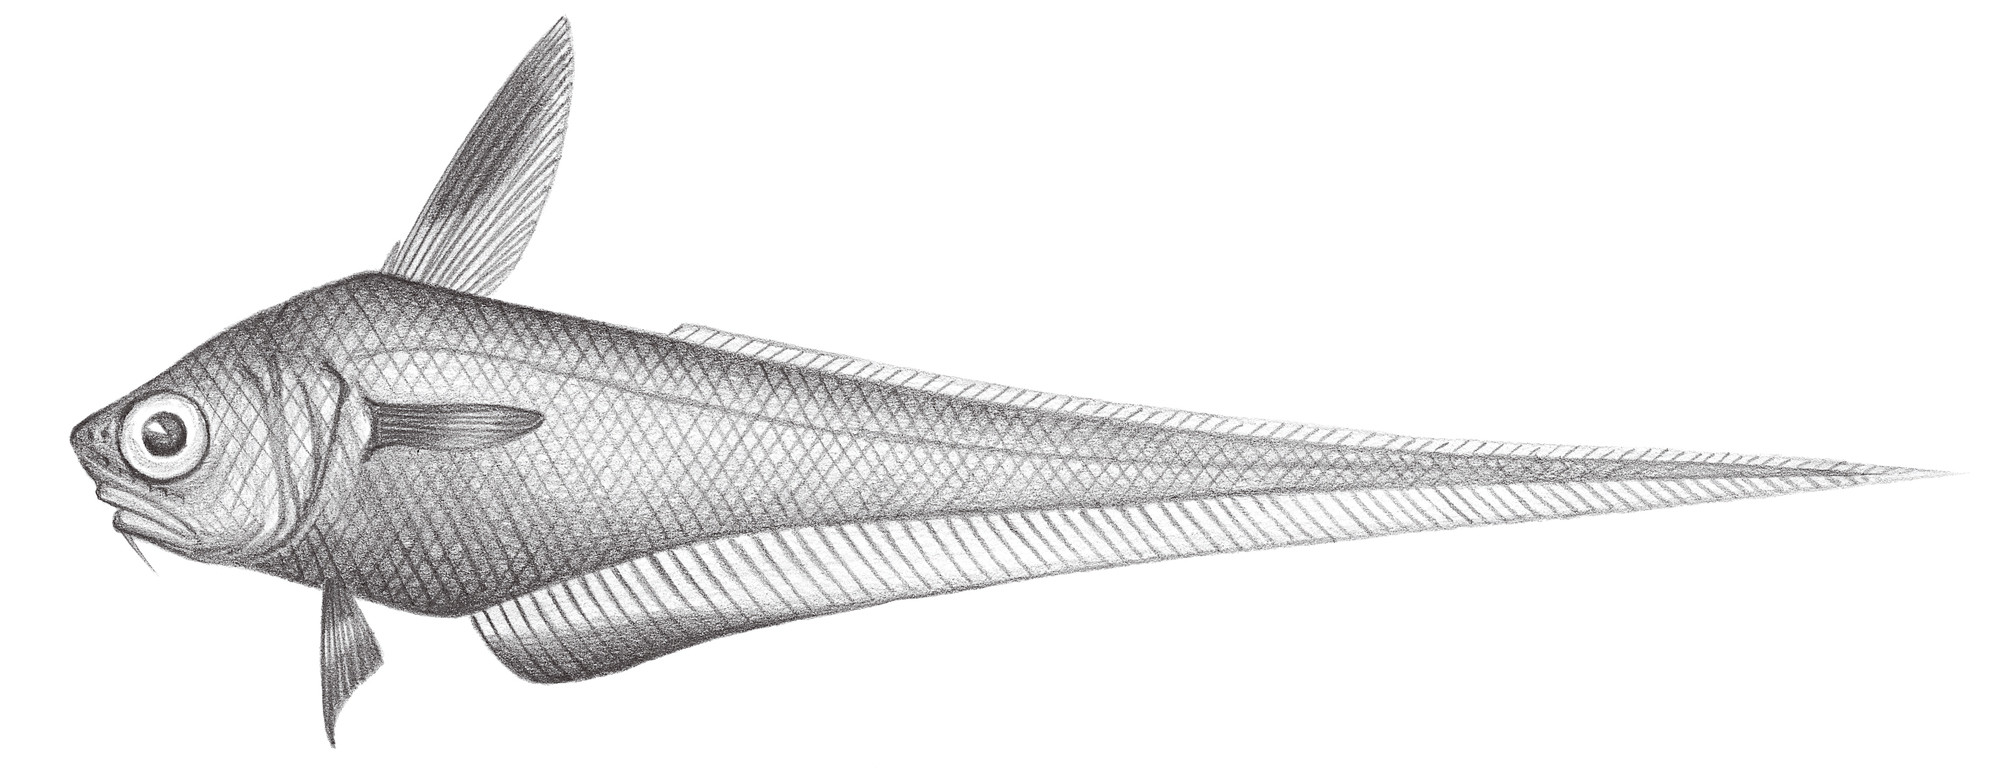 586.	軟頭條鱈 Malacocephalus laevis (Lowe, 1843)